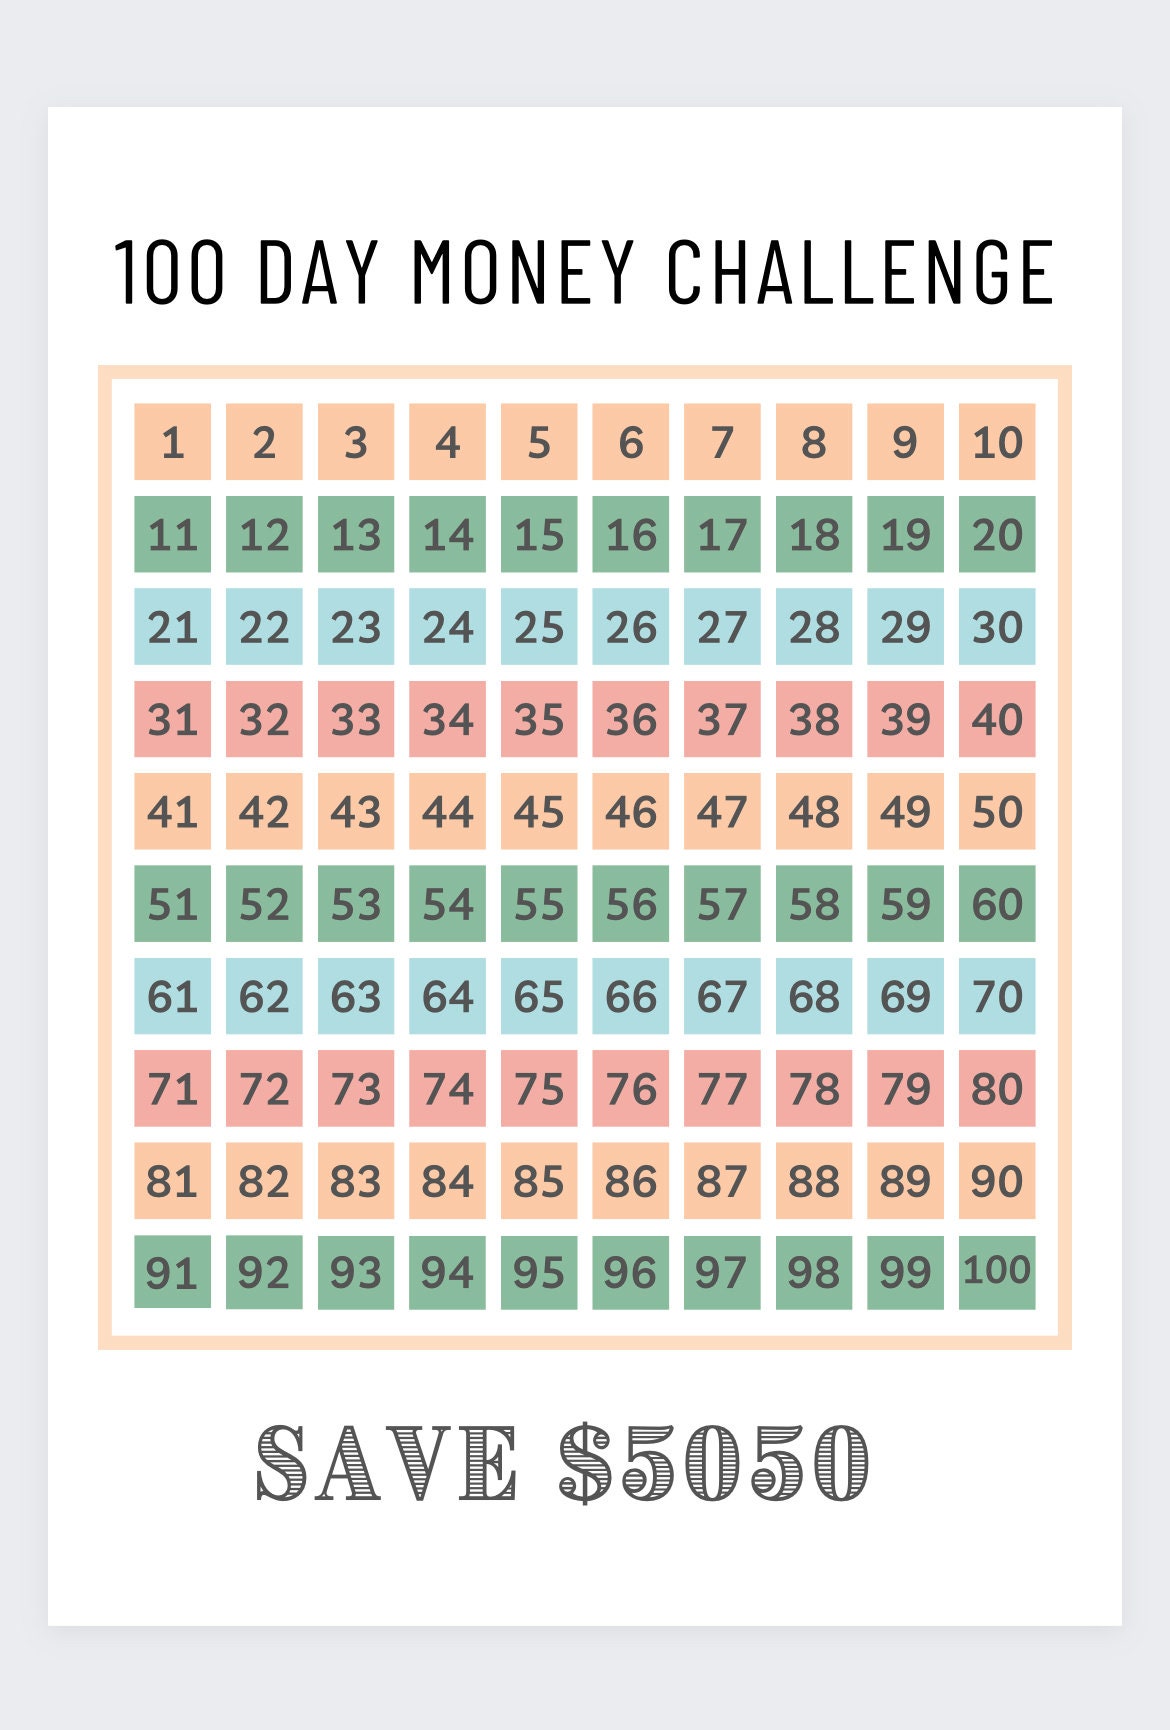 100-day-money-challenge-money-challenge-savings-challenge-3-month-challenge-money-savings